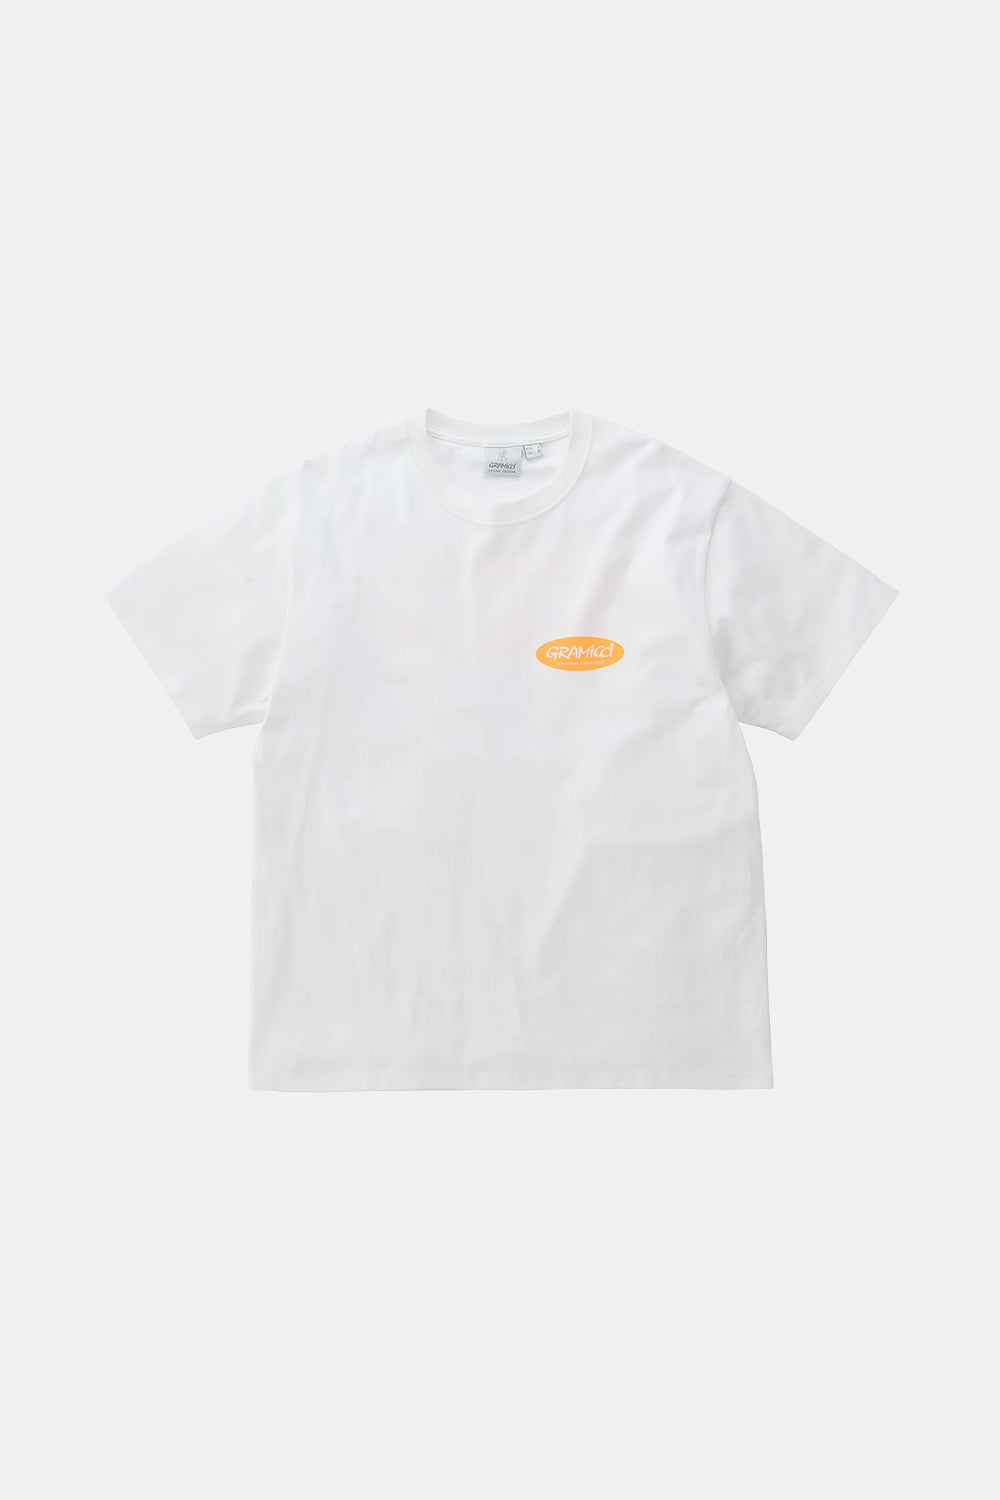 Gramicci Freedom Oval T-Shirt (White)